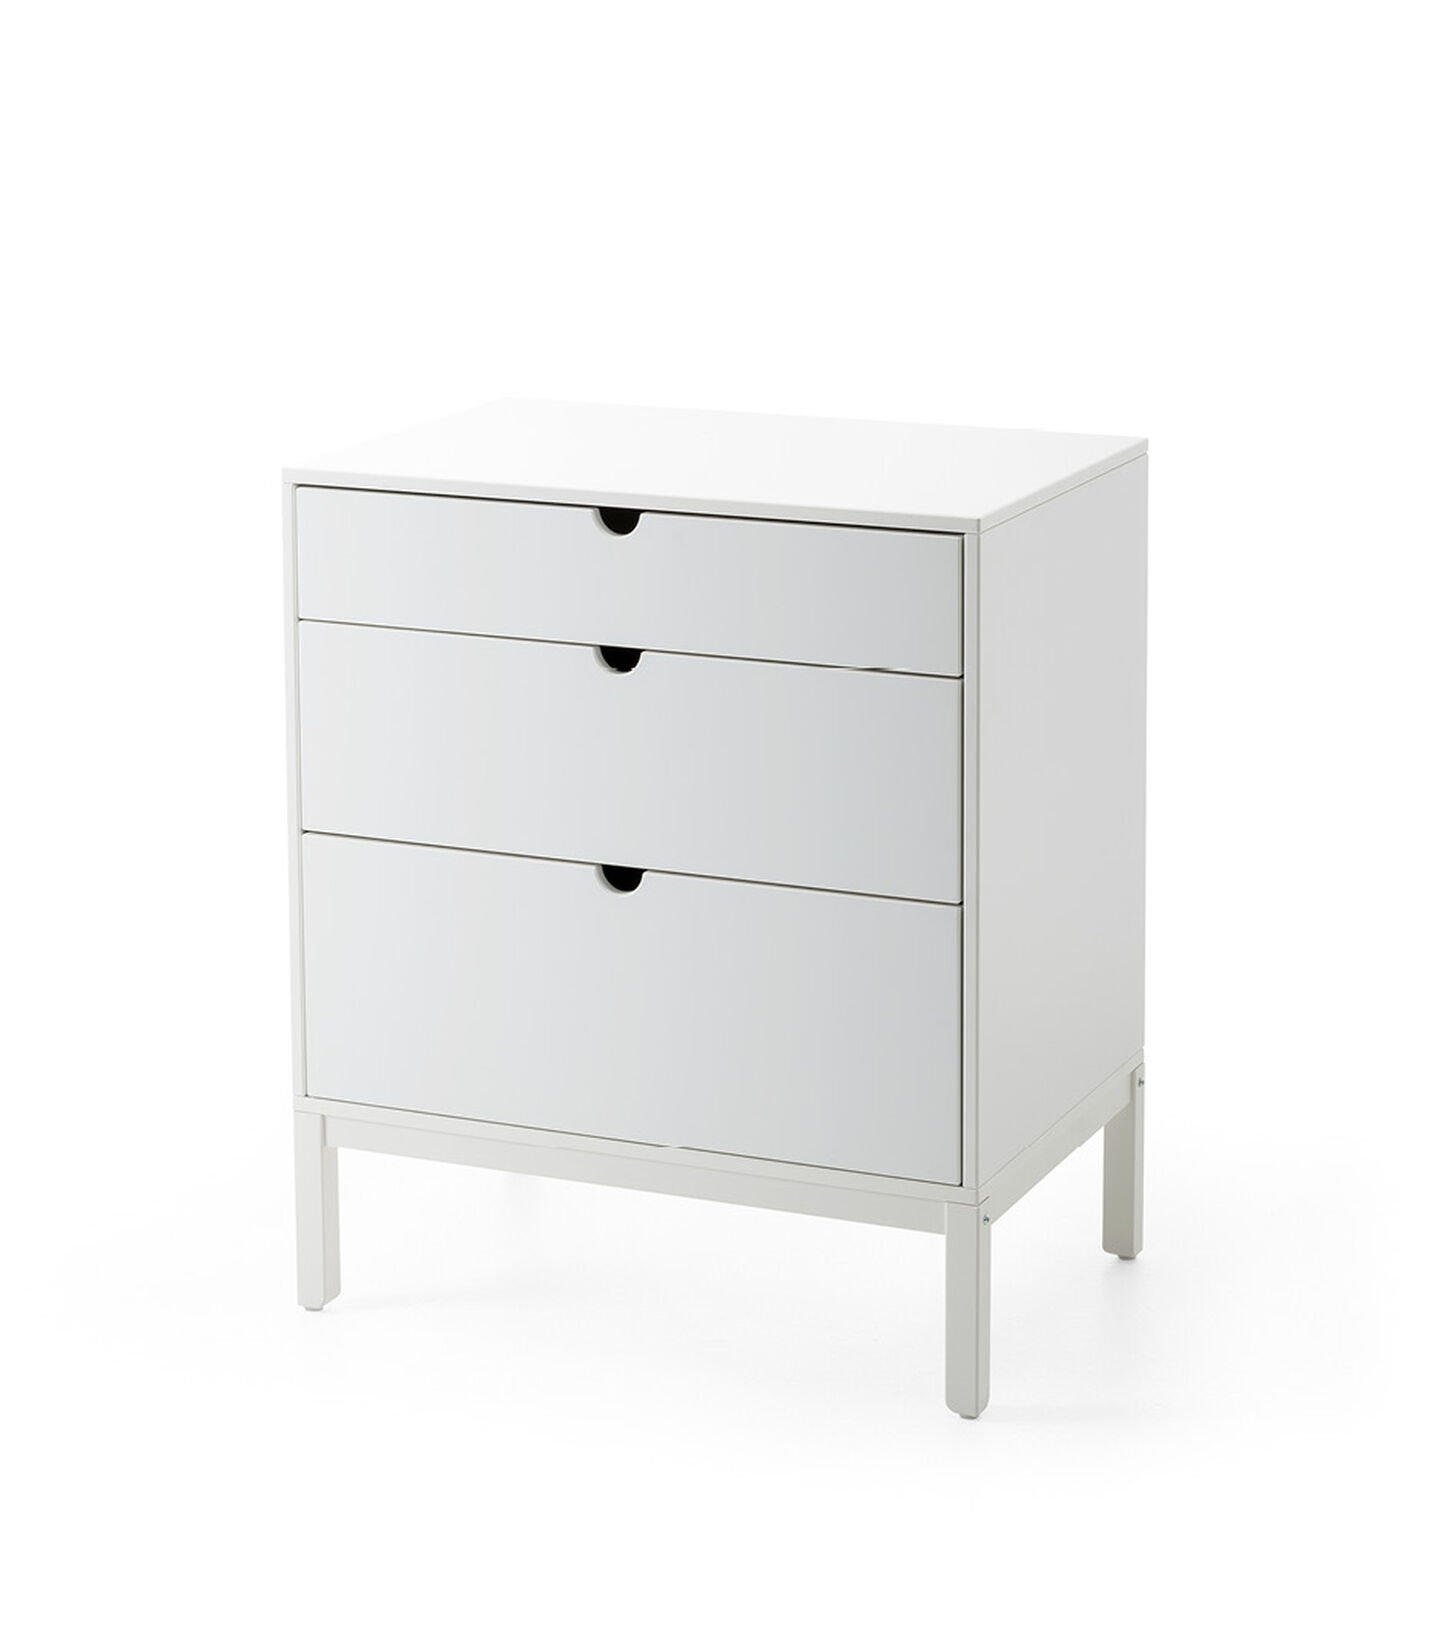 Stokke® Home™ Dresser, White. view 1